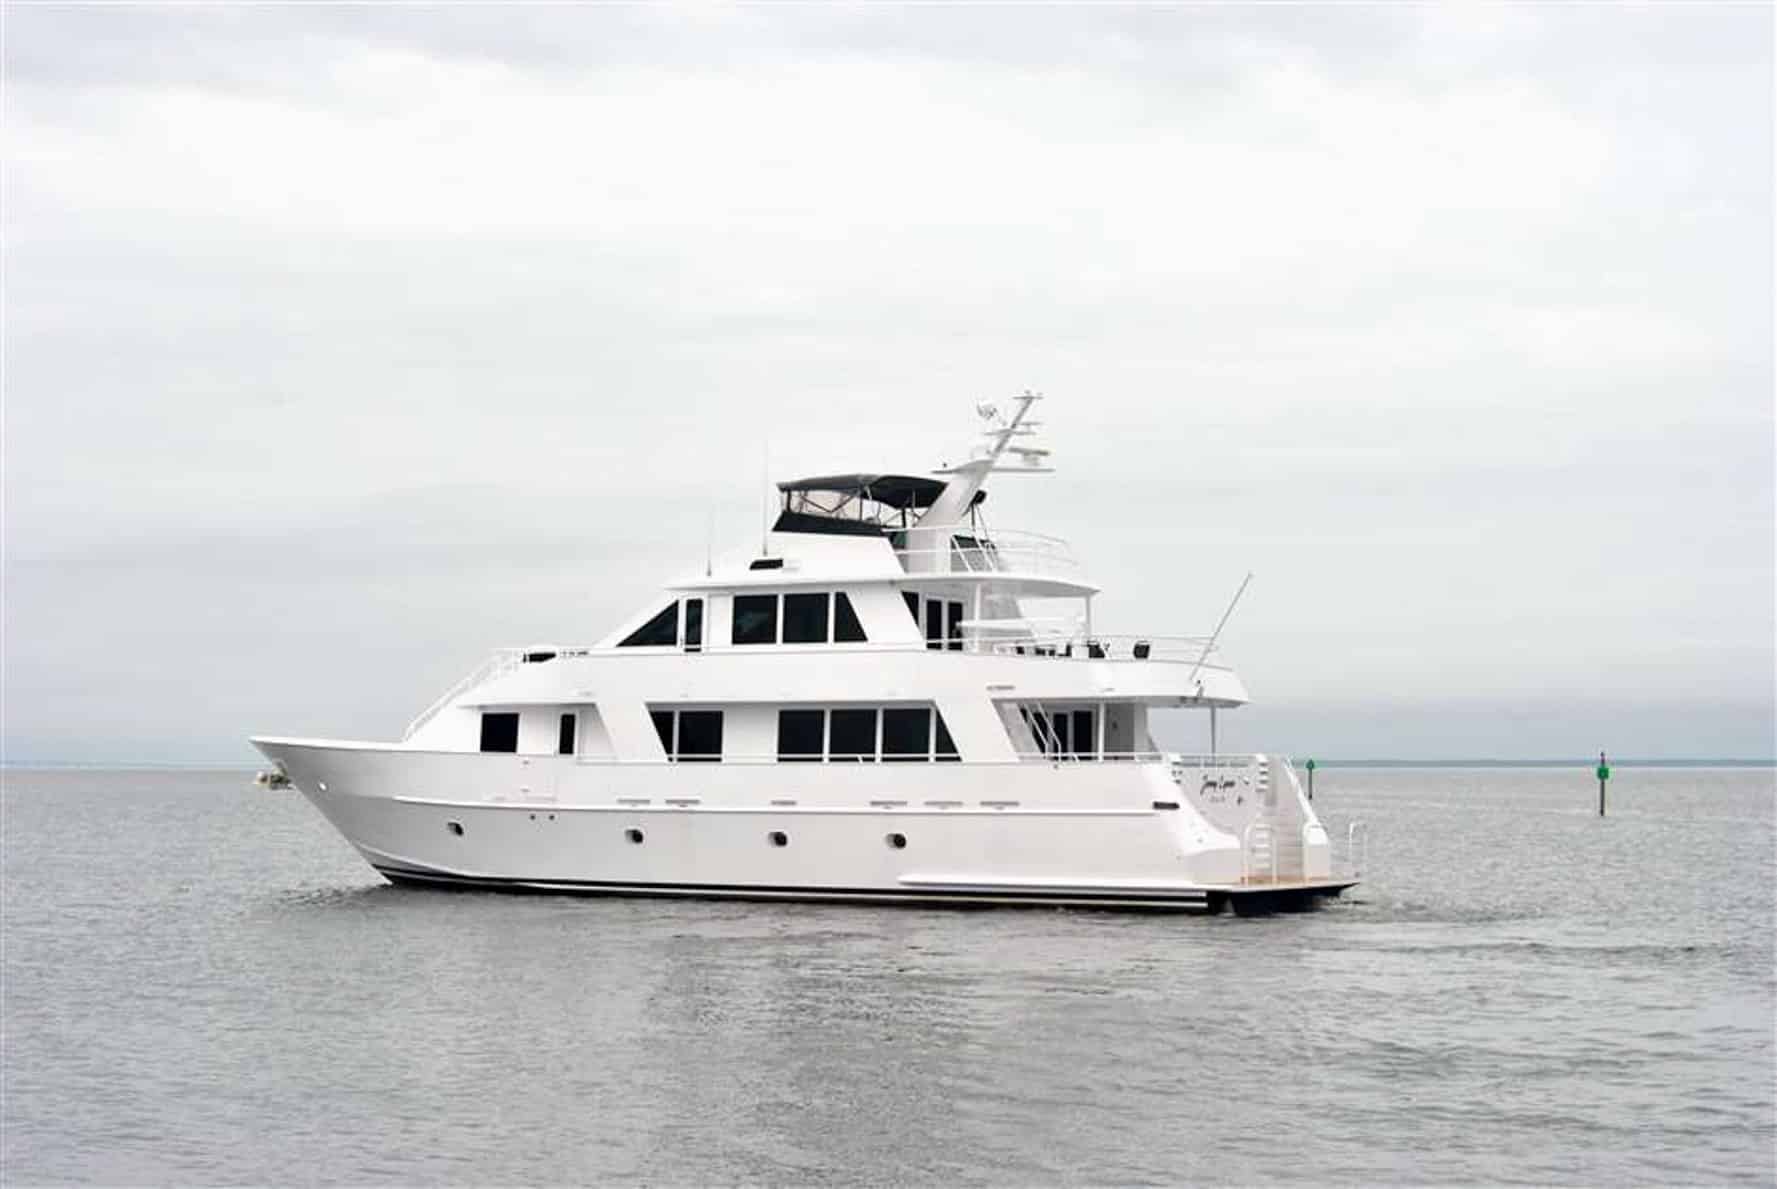 Jenny Lynne 87 Voyager - Luxury Yacht Sailing in Open Waters